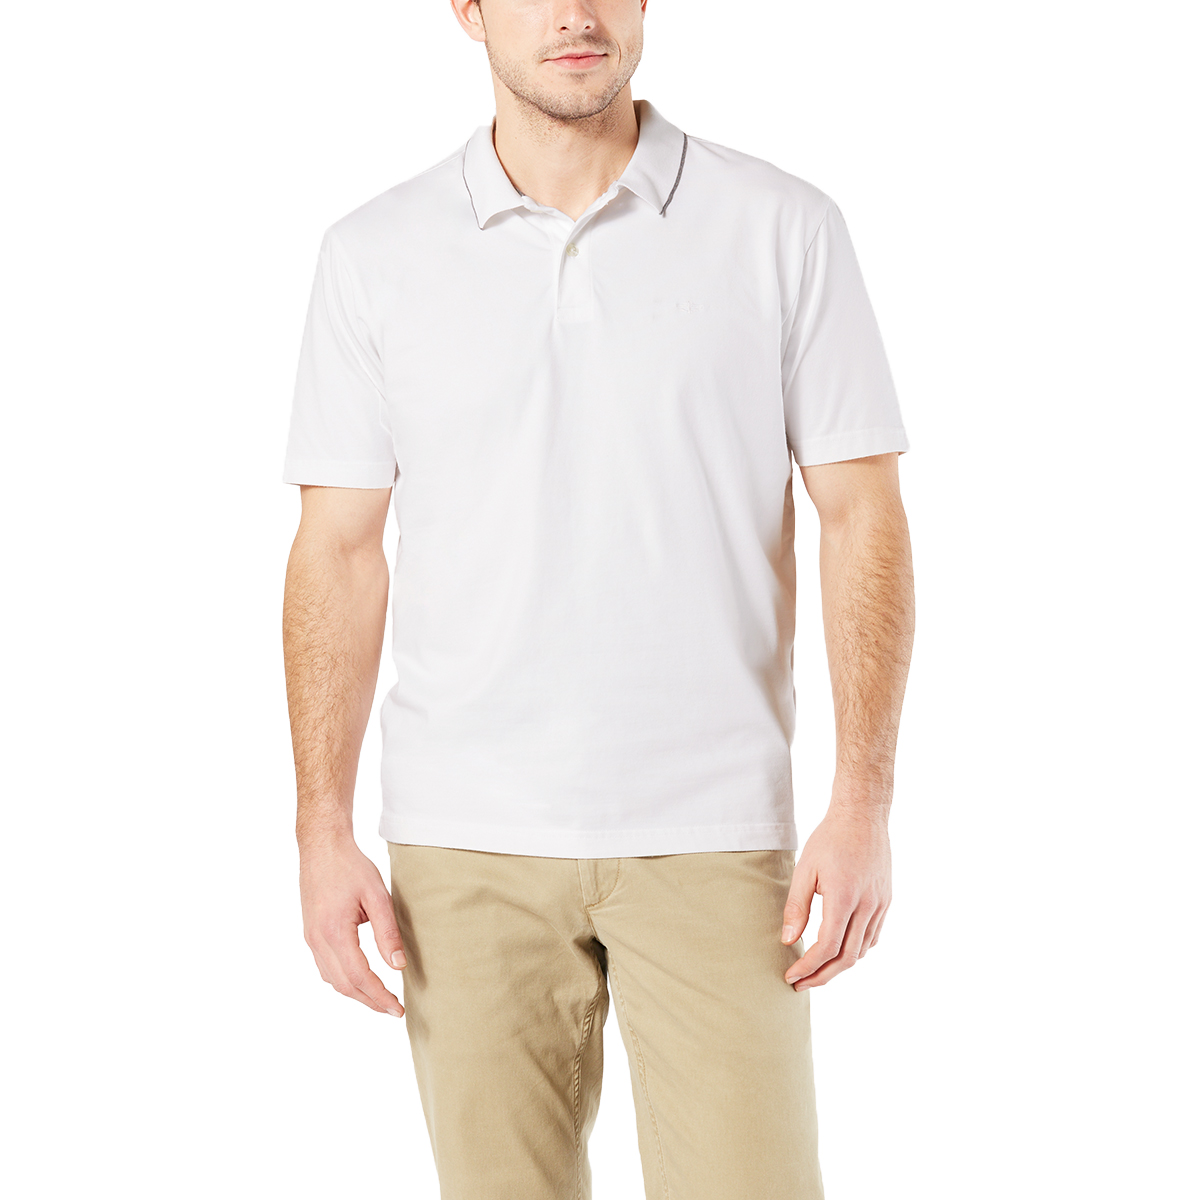 Dockers Men's Performance Short-Sleeve Polo Shirt - White, L